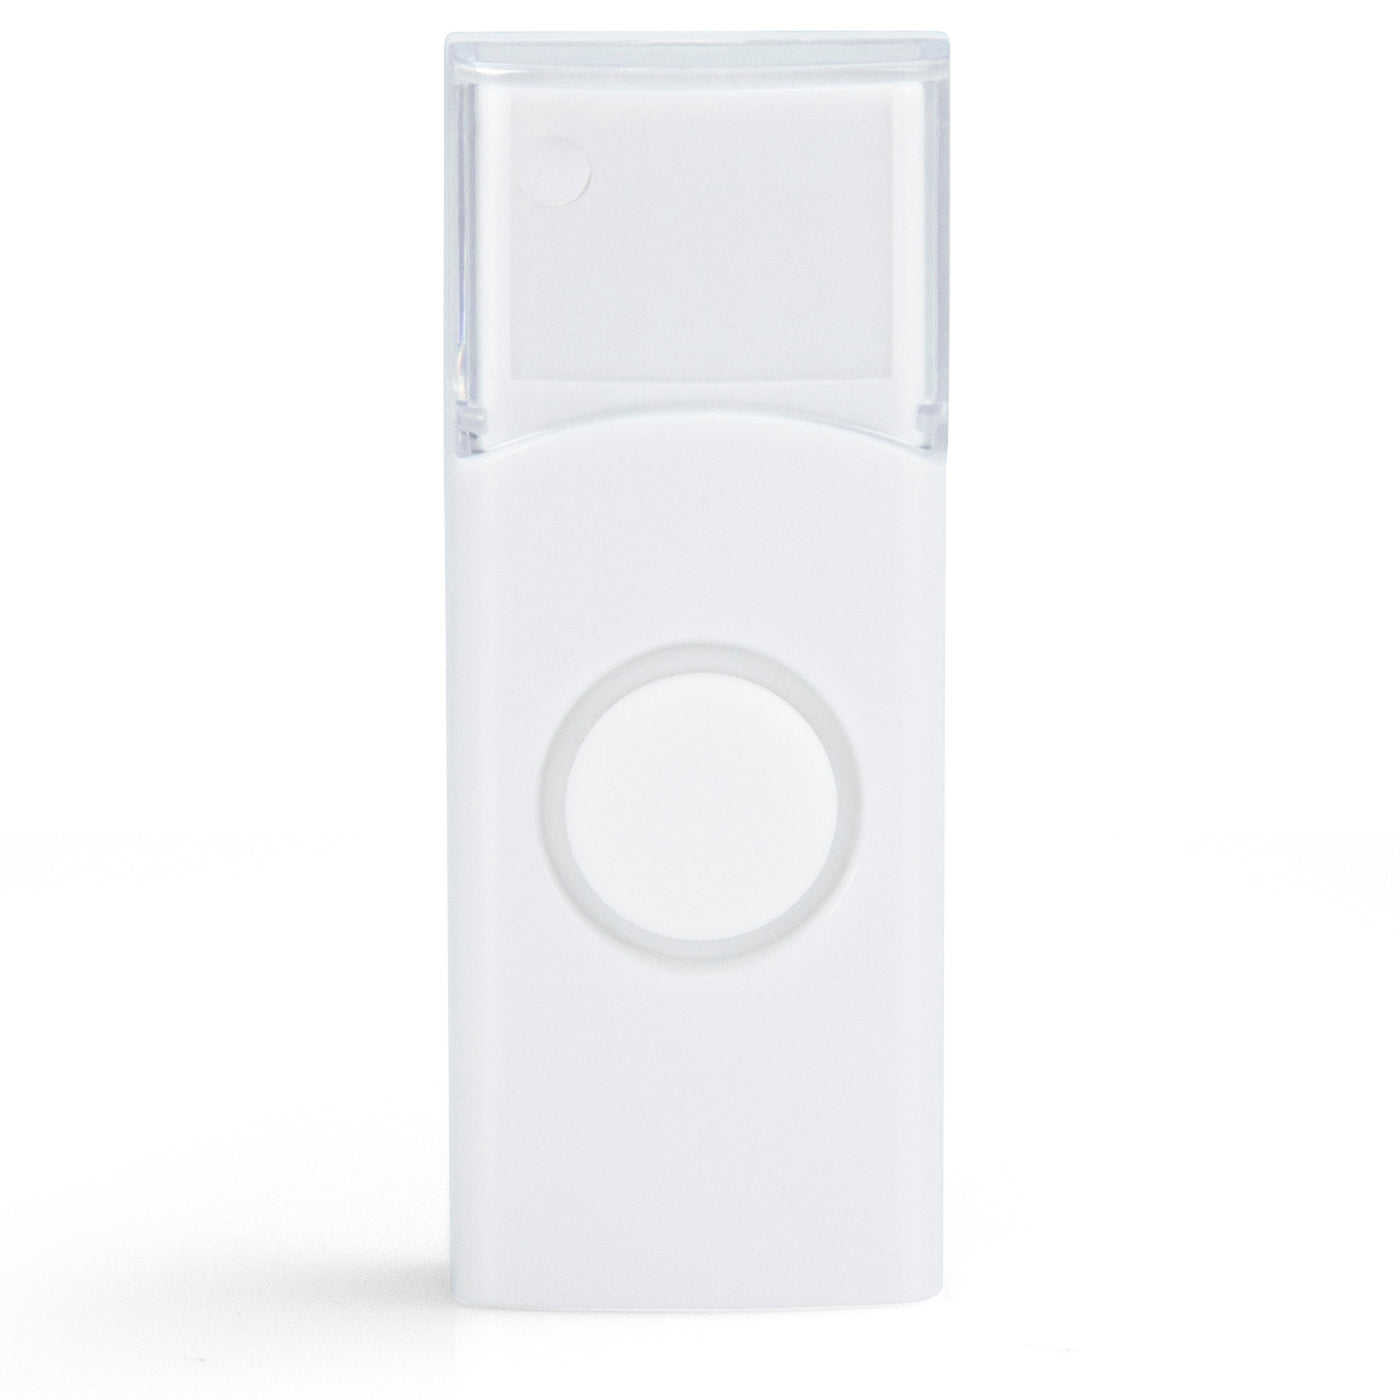 Alecto ADB-11WT - Wireless doorbell, white